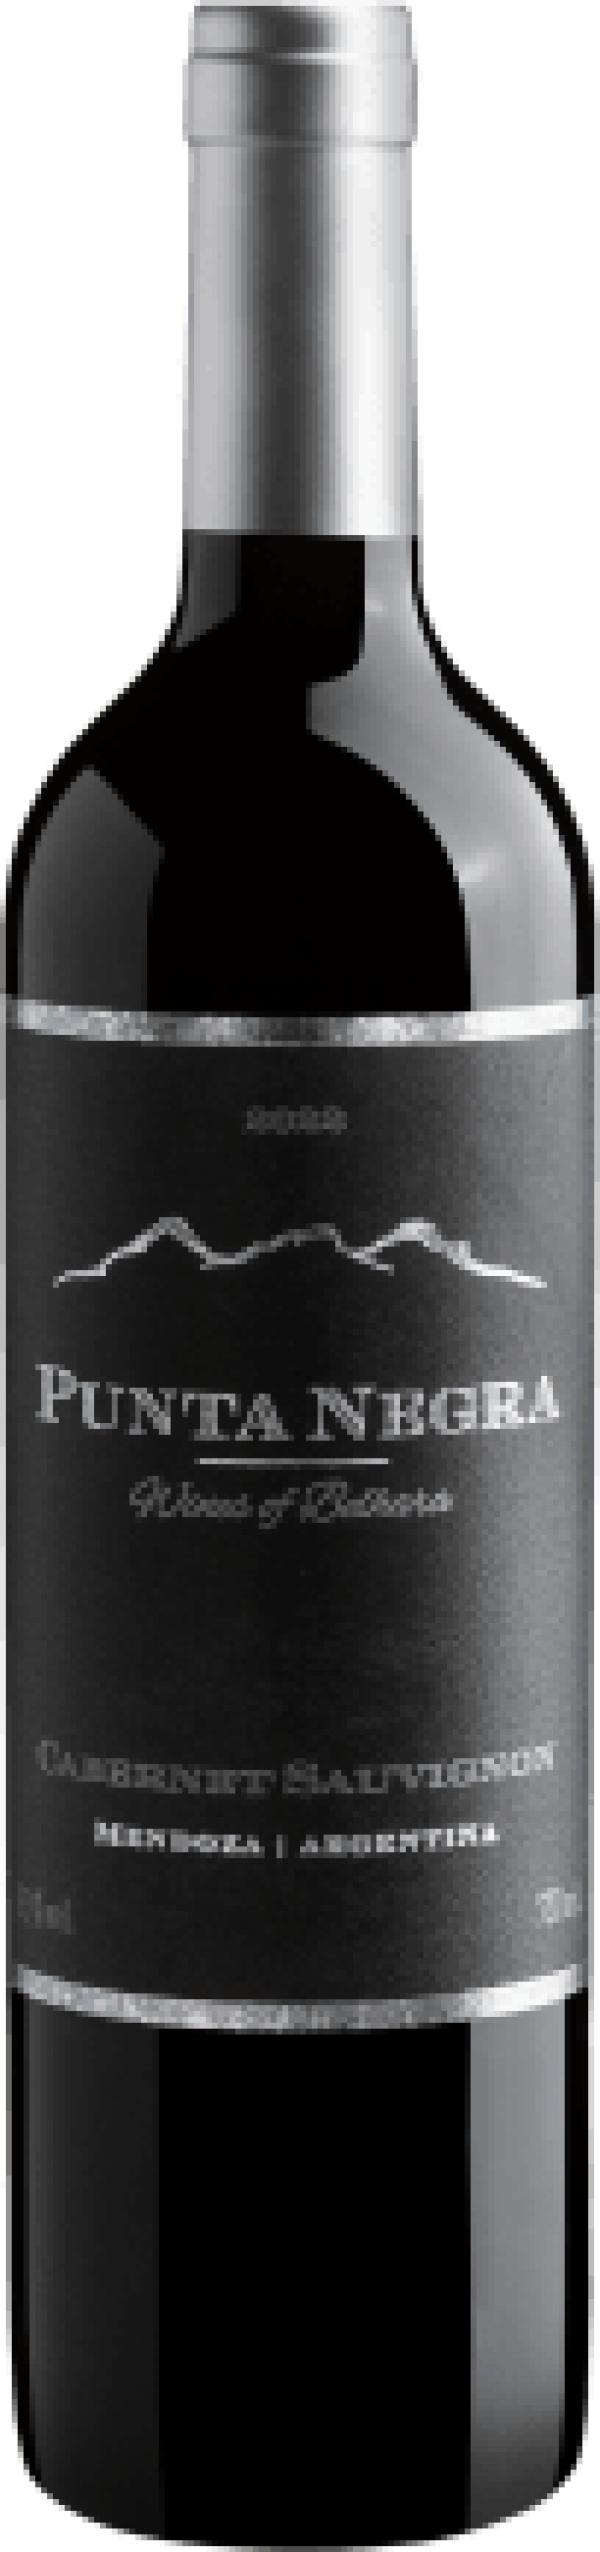 Punta Negra Wines of Belhara Cabernet Sauvignon 2022